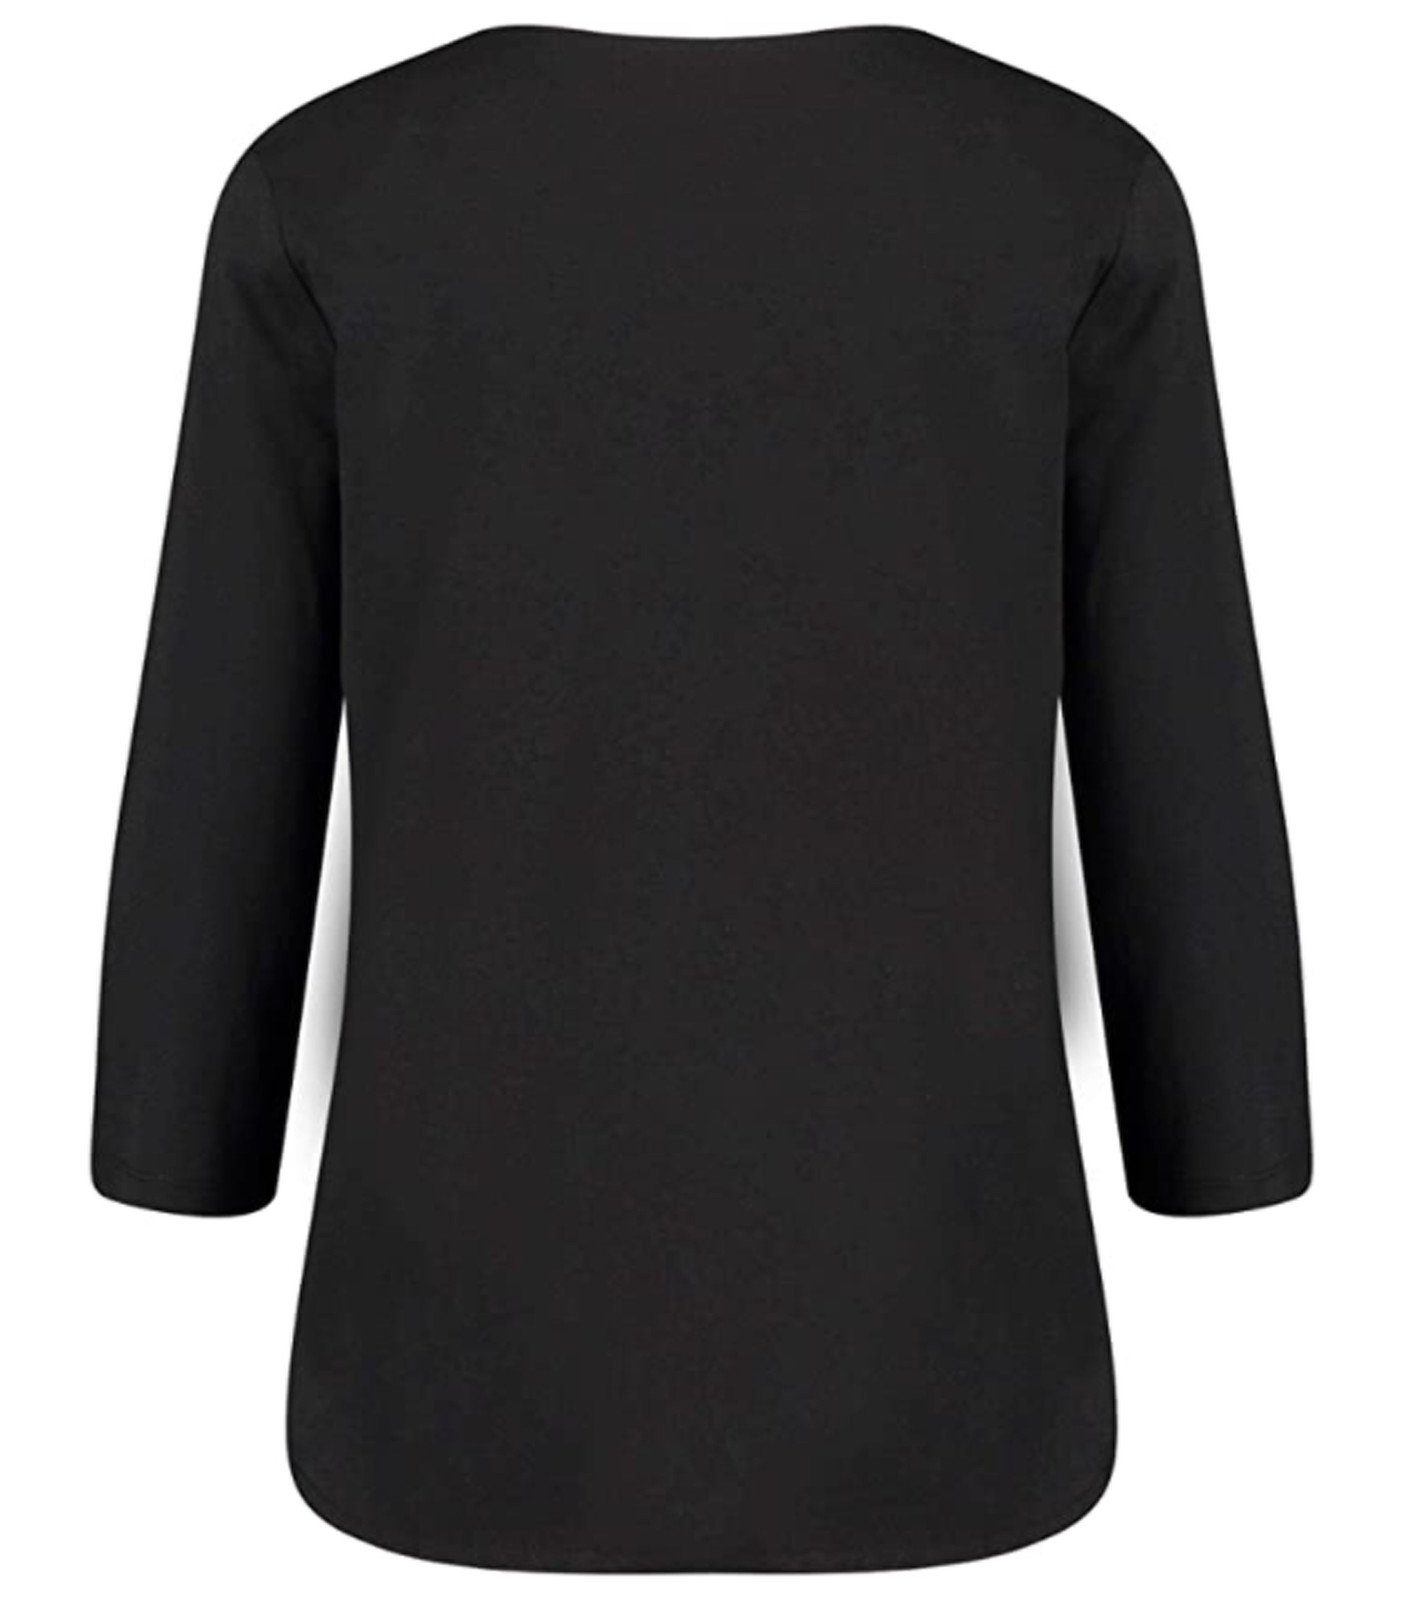 Damen Shirts Kate Storm Shirtbluse katestorm Blusen-Shirt grafisches Damen Frühlings-Shirt mit 3/4-Ärmeln Freizeit-Shirt Schwarz